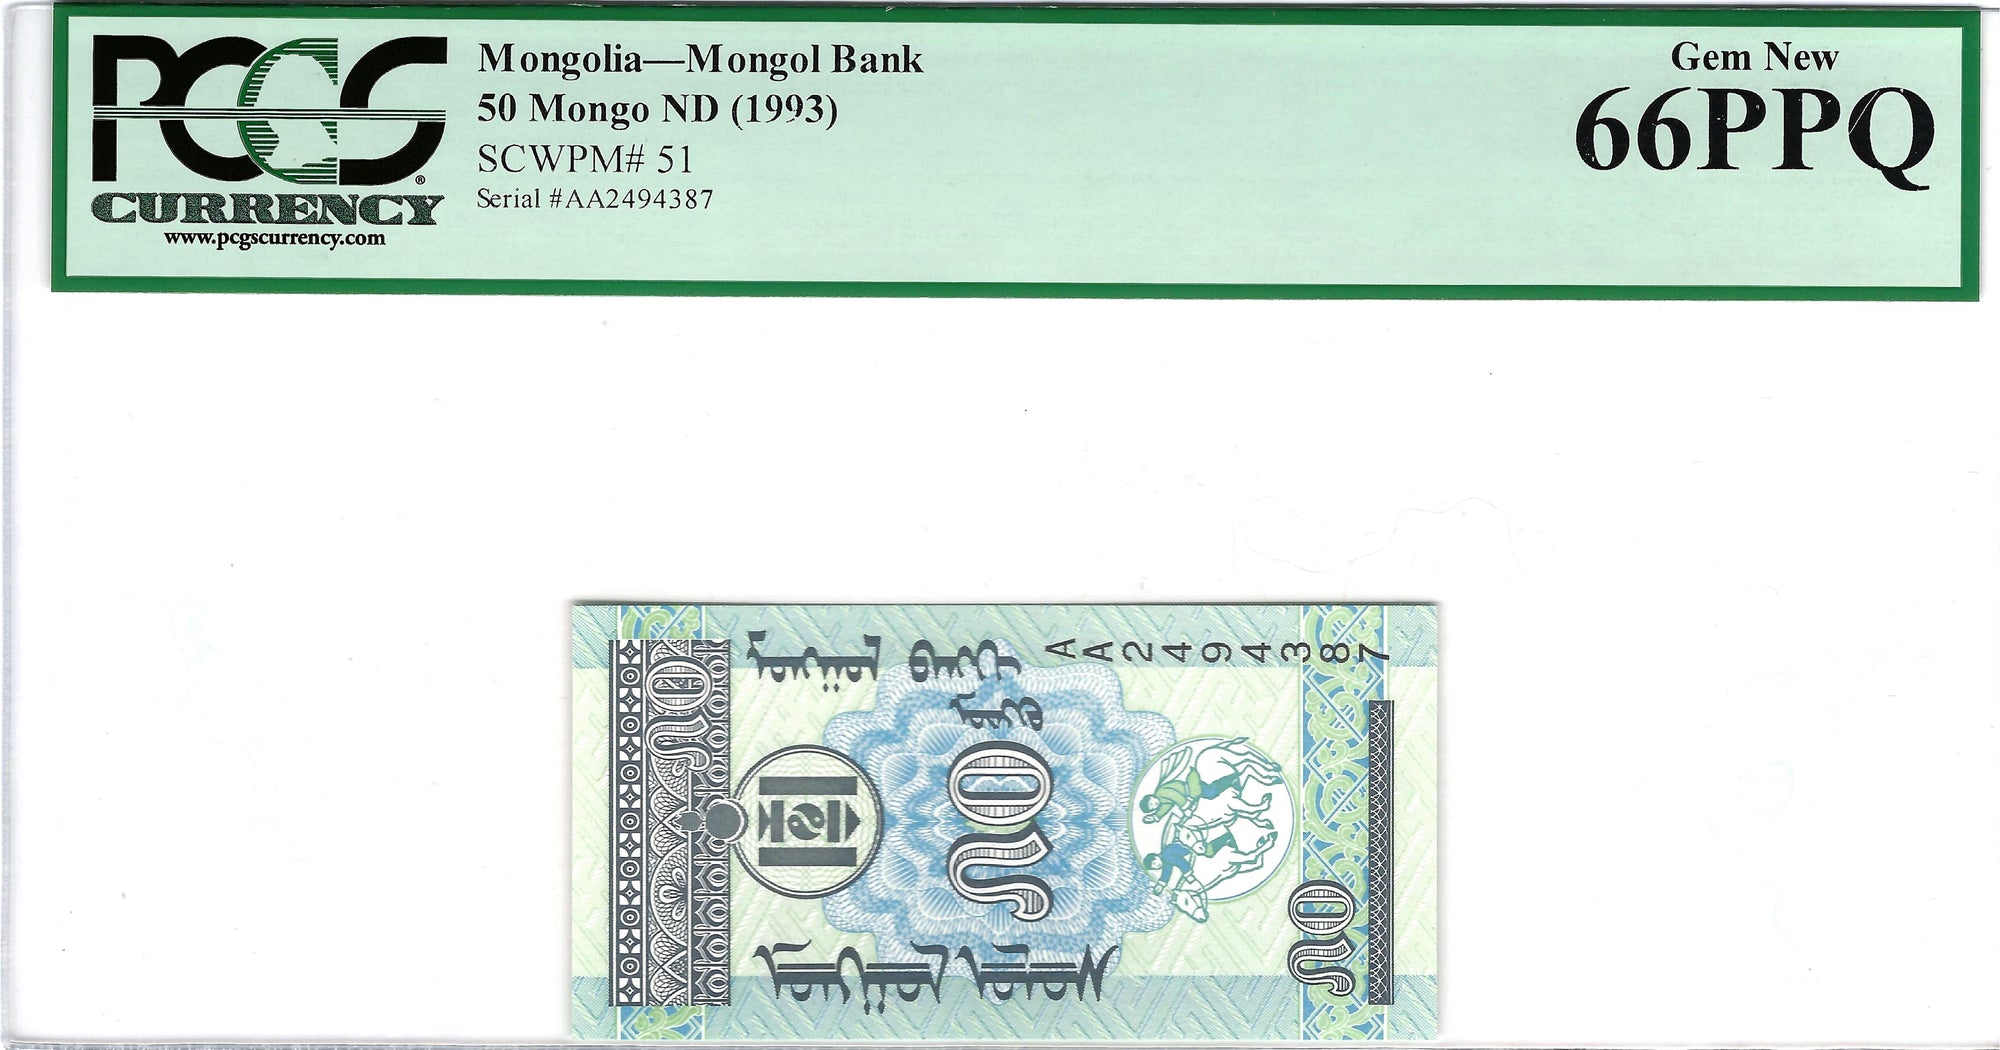 1993 50 Mongo ND, Mongolia Mongol Bank, PCGS 66PPQ